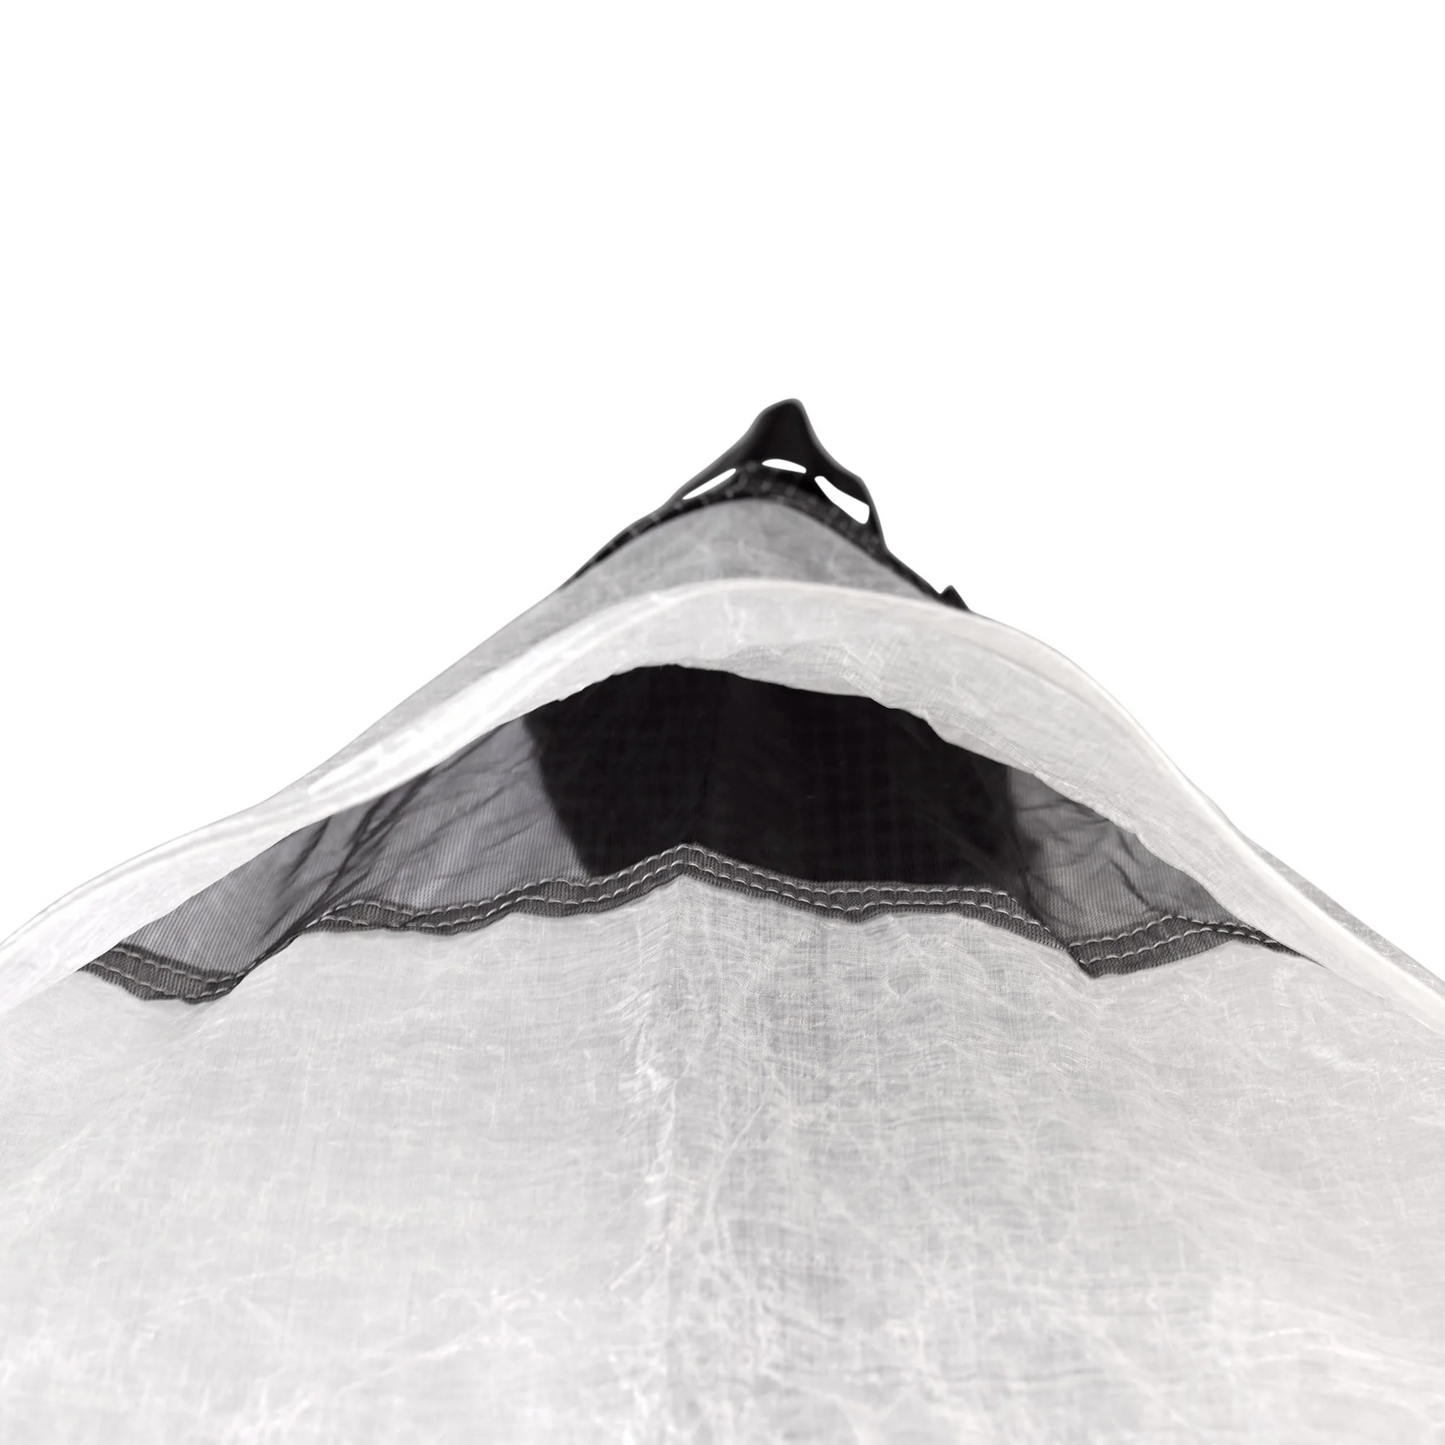 Hyperlite Mountain Gear - Ultamid 4 - Ultralight 4 Person Pyramid Tent